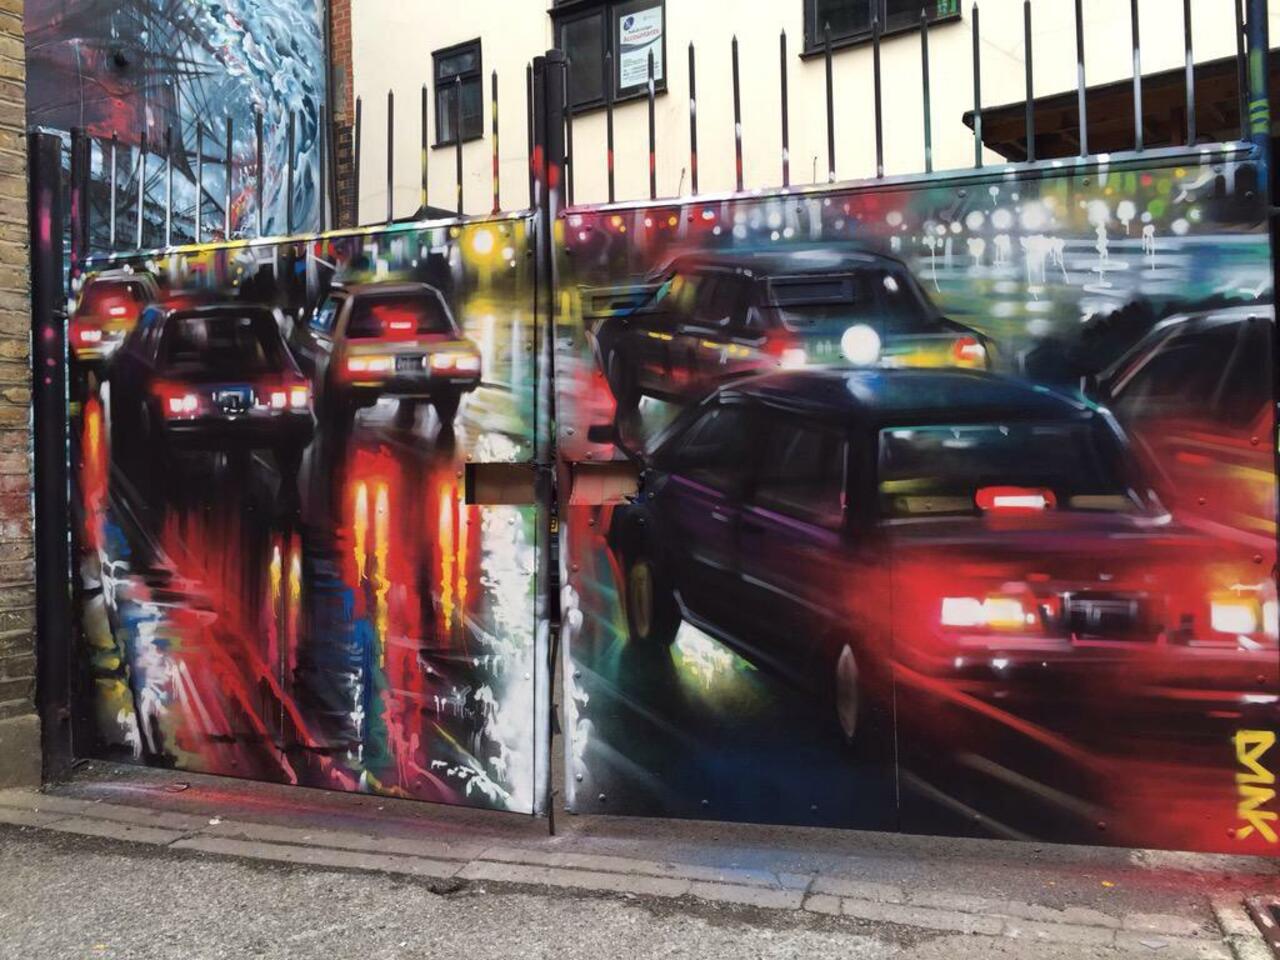 New Street Art by DanKitchener in Brick Lane London 

#art #graffiti #mural #streetart http://t.co/9A510cQHZa